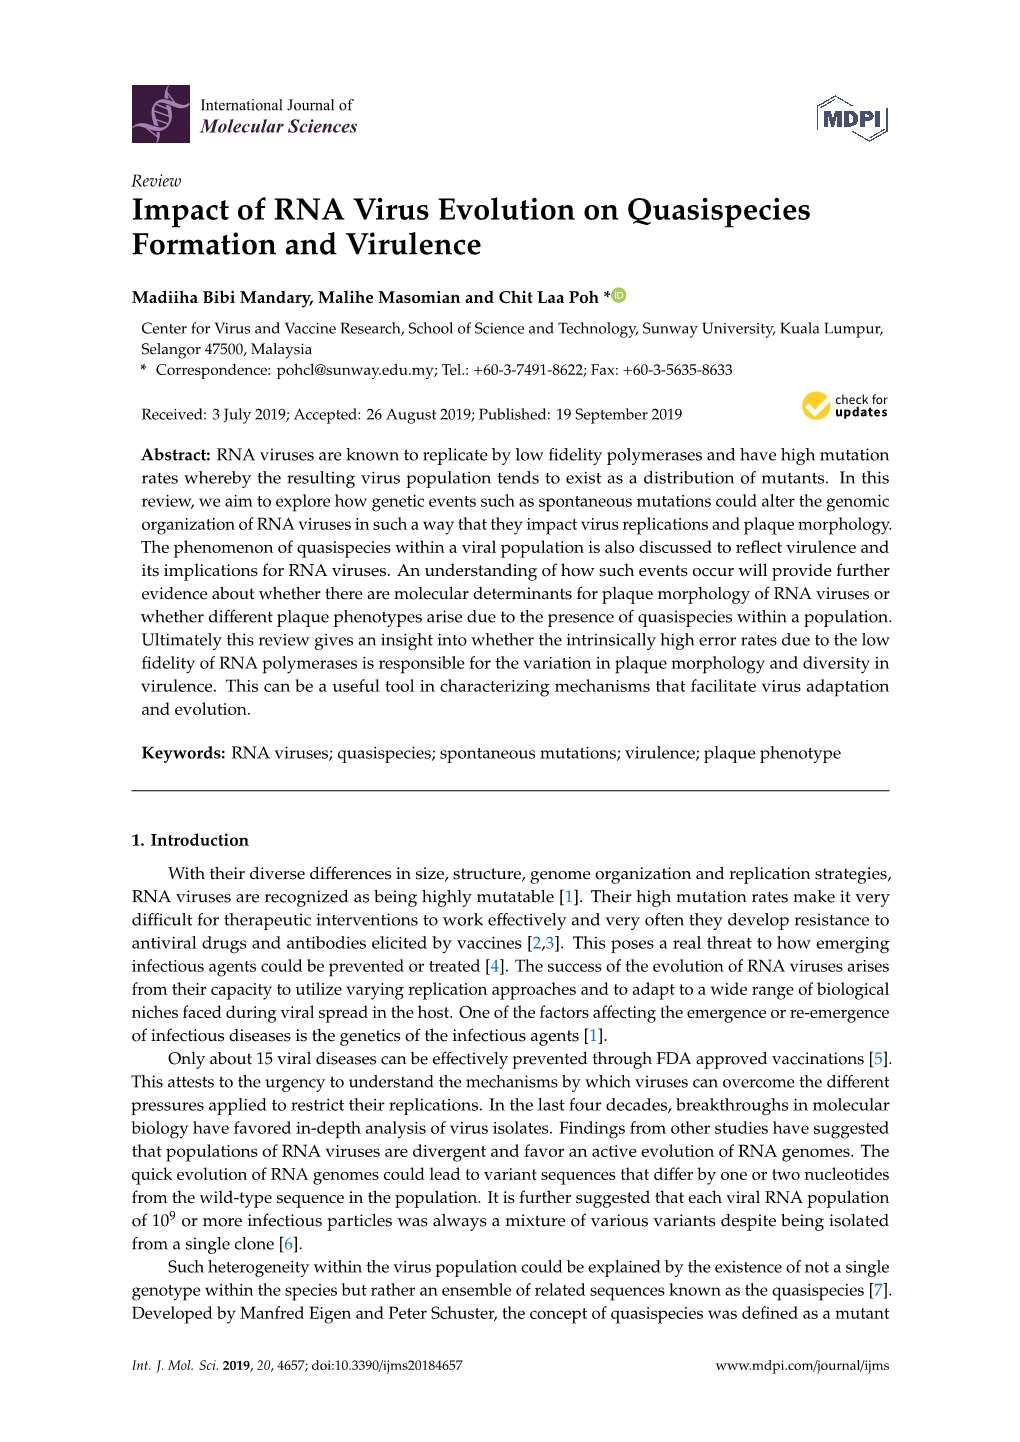 Impact of RNA Virus Evolution on Quasispecies Formation and Virulence